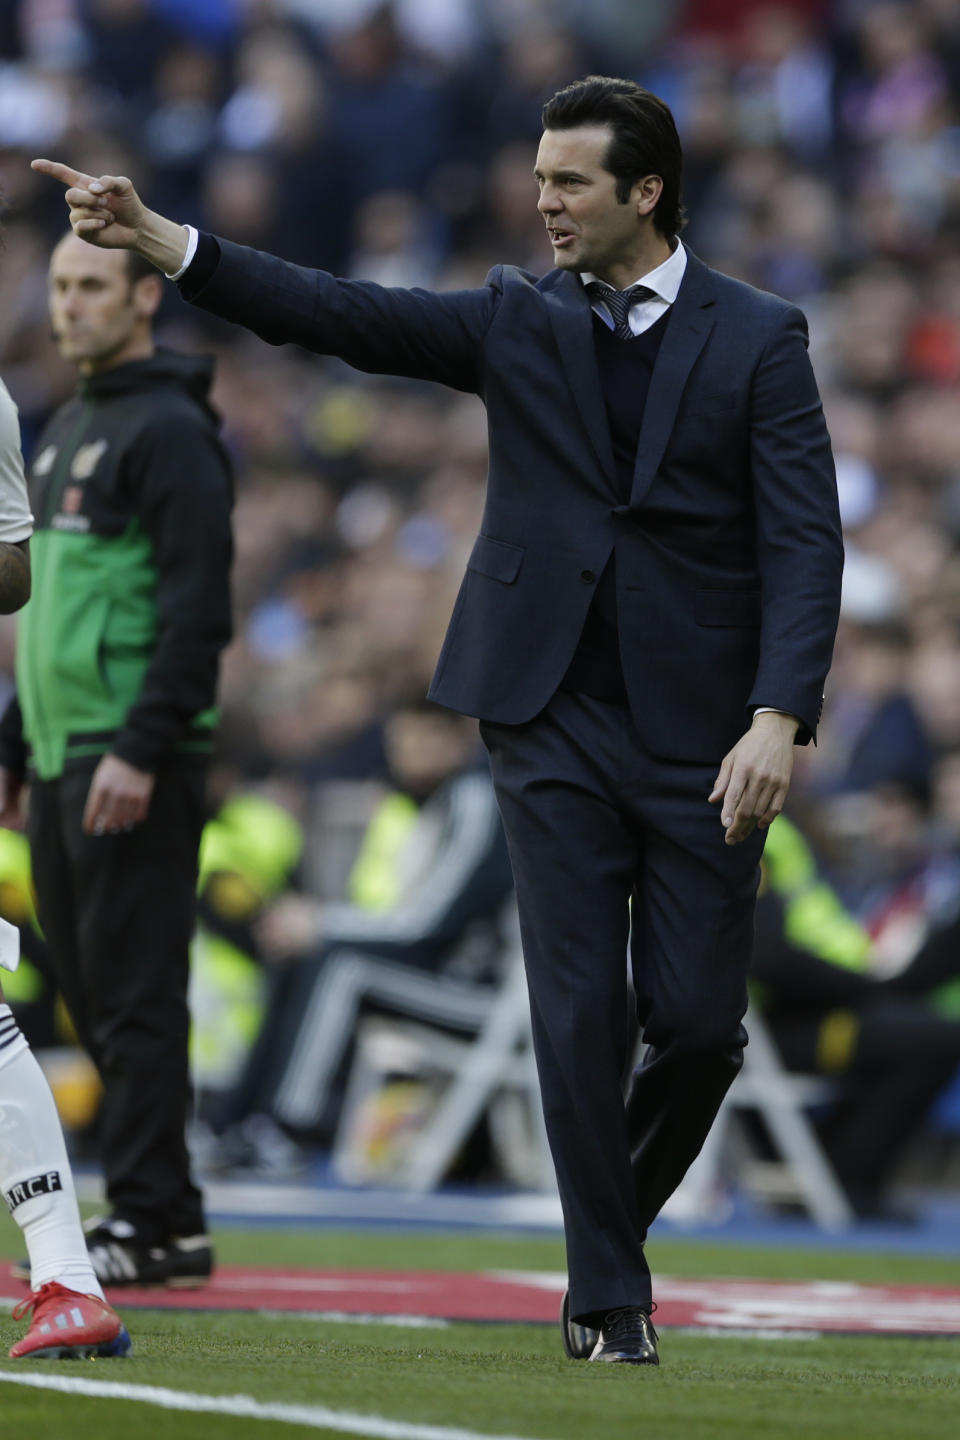 Real Madrid's head coach Santiago Solari shouts instructions during a La Liga soccer match between Real Madrid and Girona at the Bernabeu stadium in Madrid, Spain, Sunday, Feb. 17, 2019. (AP Photo/Andrea Comas)